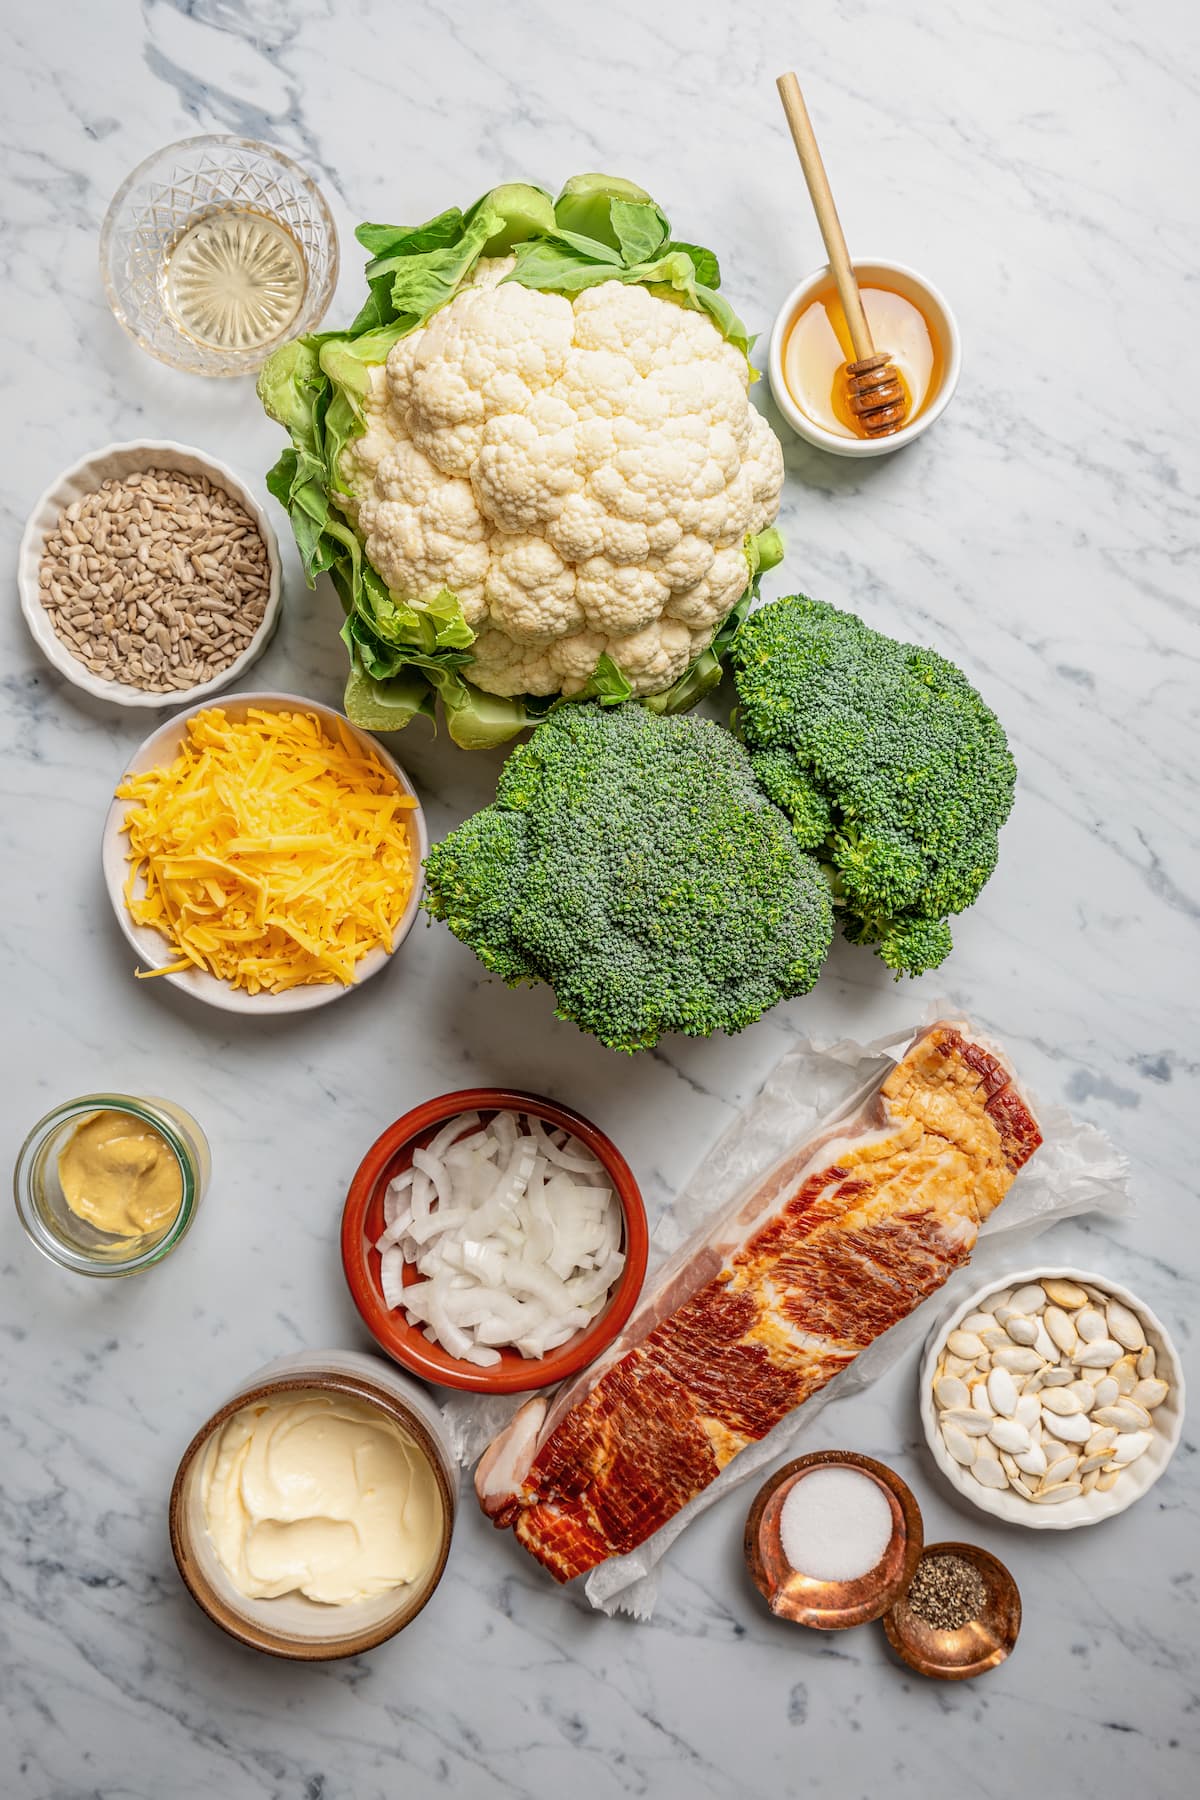 Ingredients for broccoli cauliflower salad.